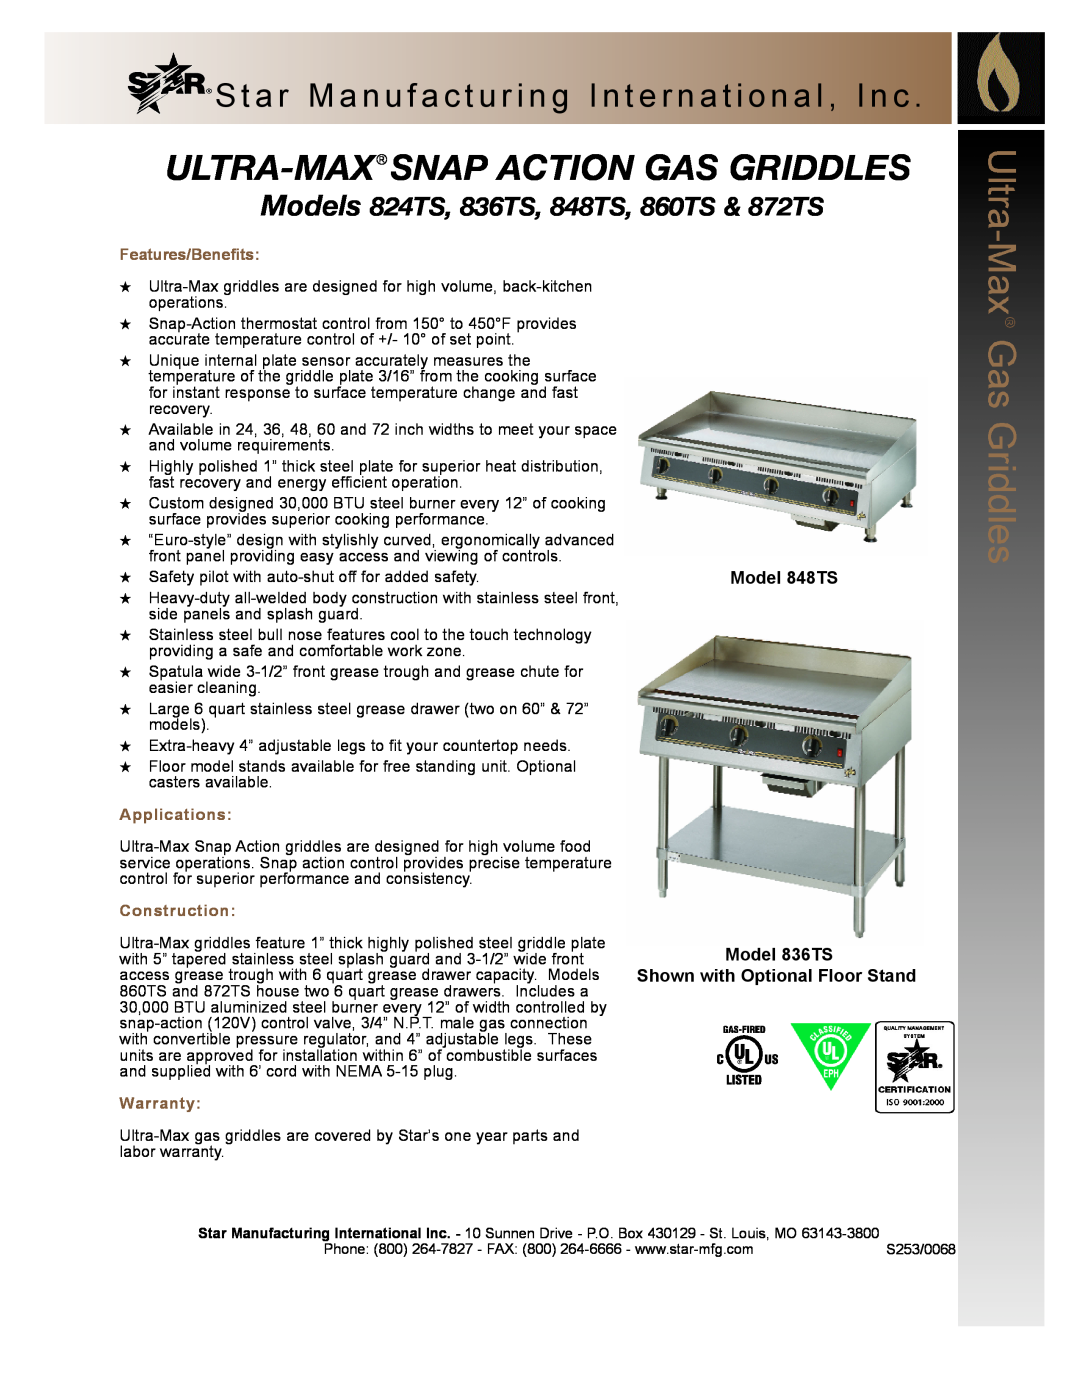 Star Manufacturing warranty Ultra-Max Snap Action Gas Griddles, Models 824TS, 836TS, 848TS, 860TS & 872TS, Applications 